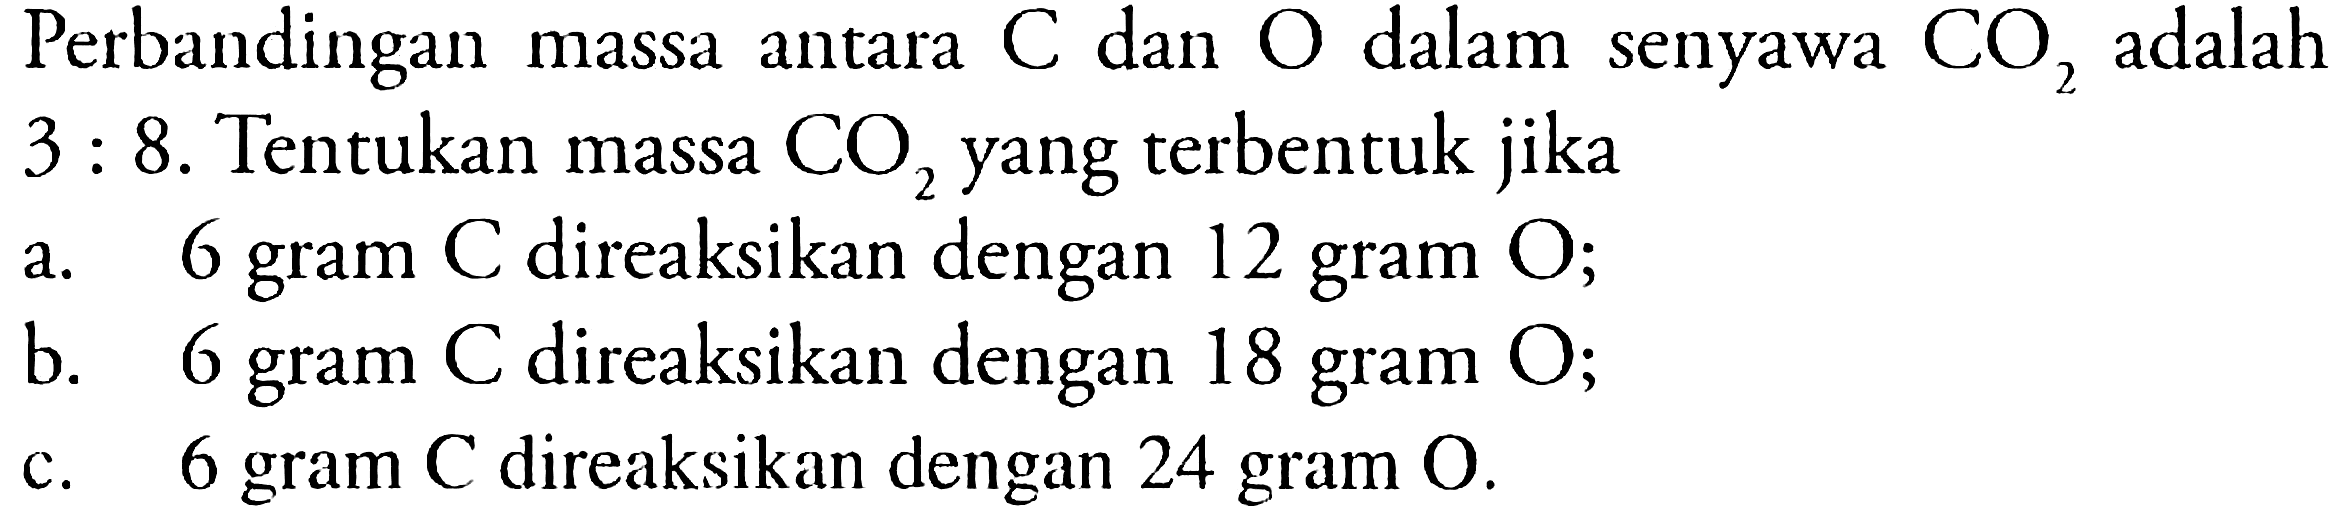 Perbandingan massa antara C dan O dalam senyawa CO2 adalah 3 : 8. Tentukan massa CO2 yang terbentuk jika 
a. 6 gram C direaksikan dengan 12 gram O;
b. 6 gram C direaksikan dengan 18 gram O;
c. 6 gram C direaksikan dengan 24 gram O.